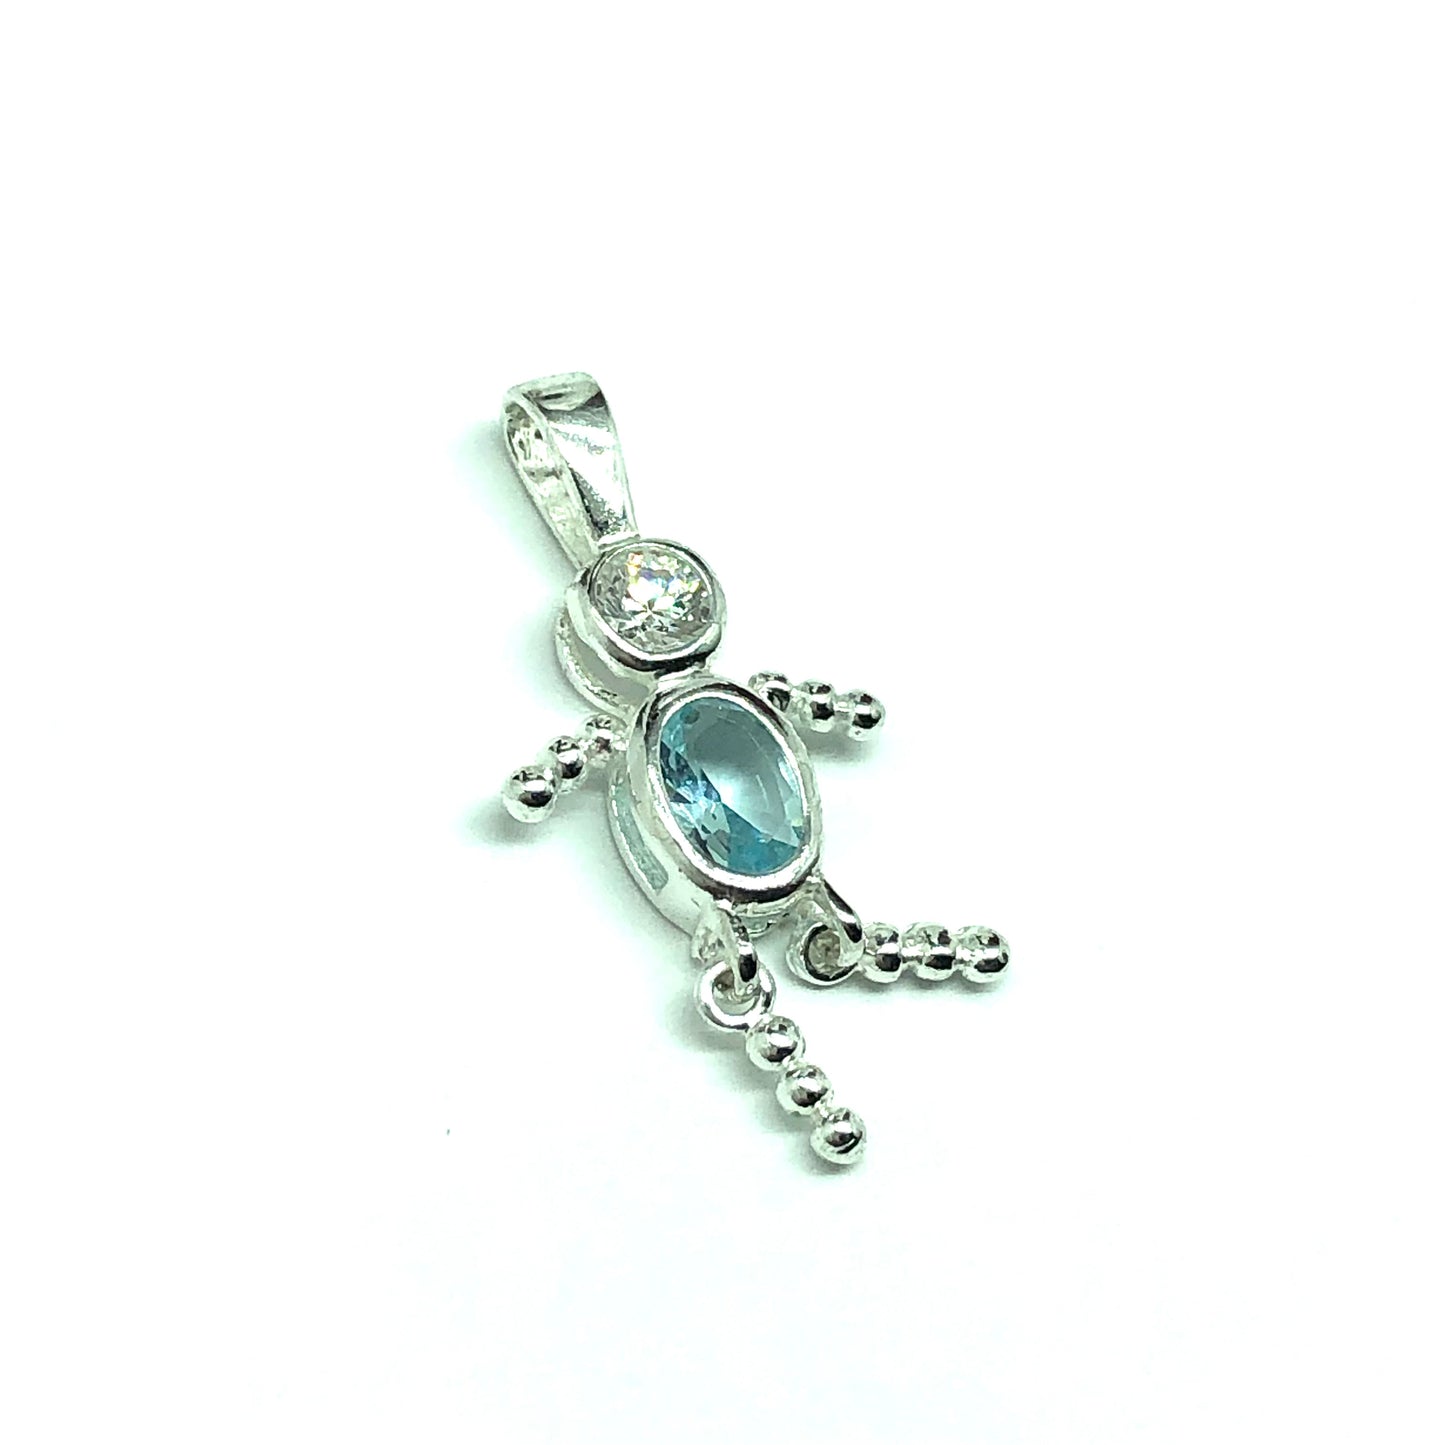 Secondhand Jewelry - 925 Sterling Silver Blue Cz December Birthstone Boy Girl Pendant